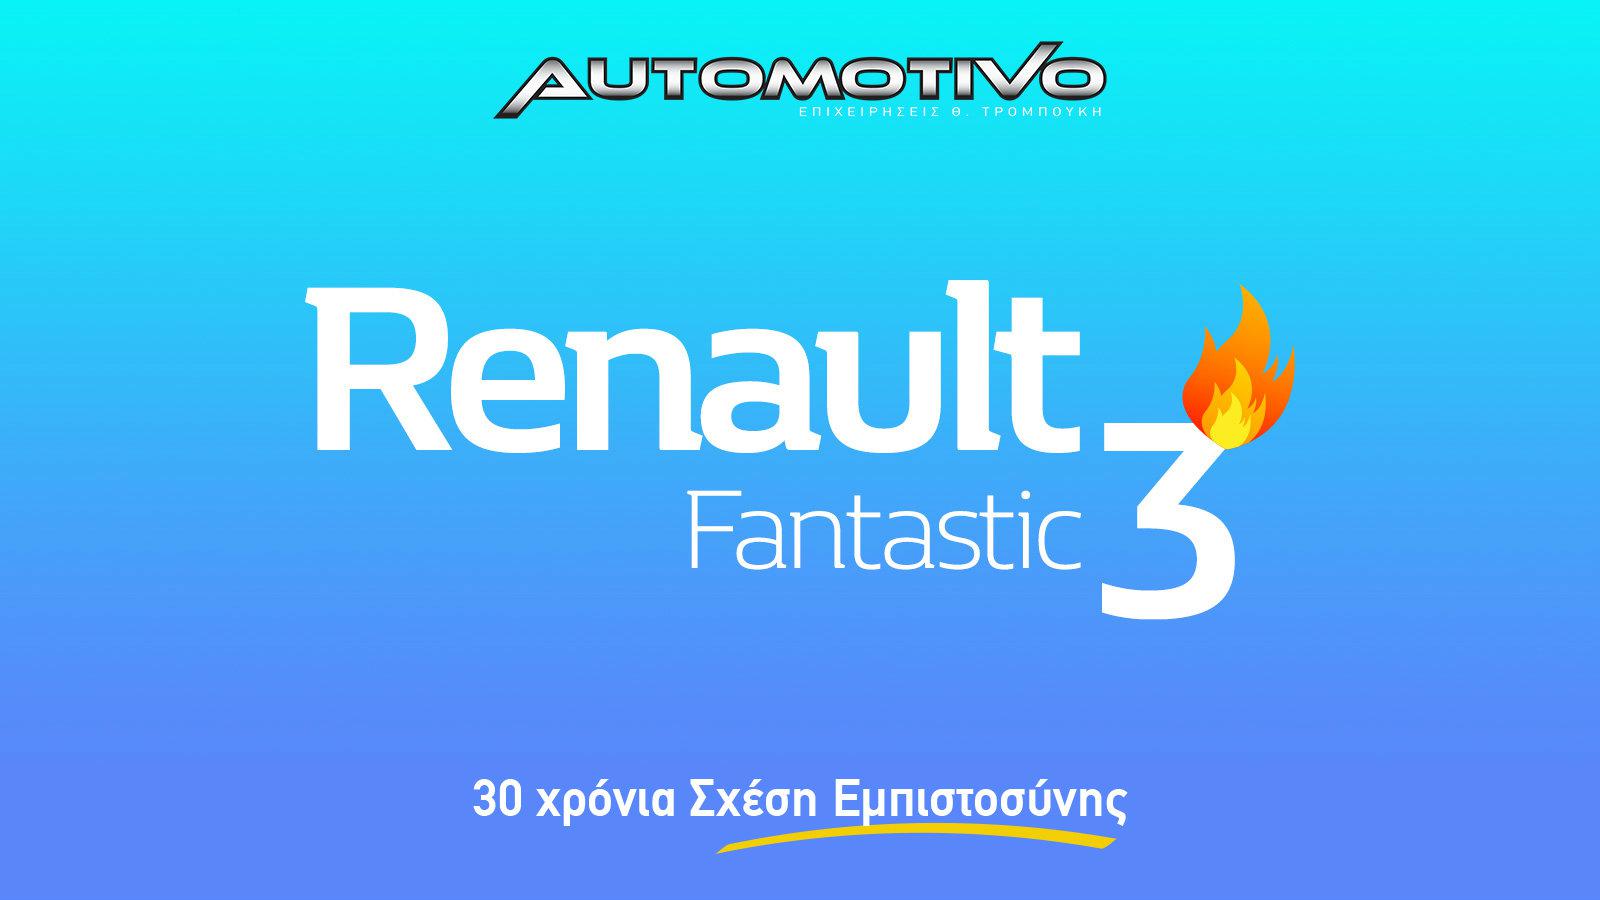 H Renault Automotivo παρουσιάζει τα Fantastic 3 σε super hot τιμές!